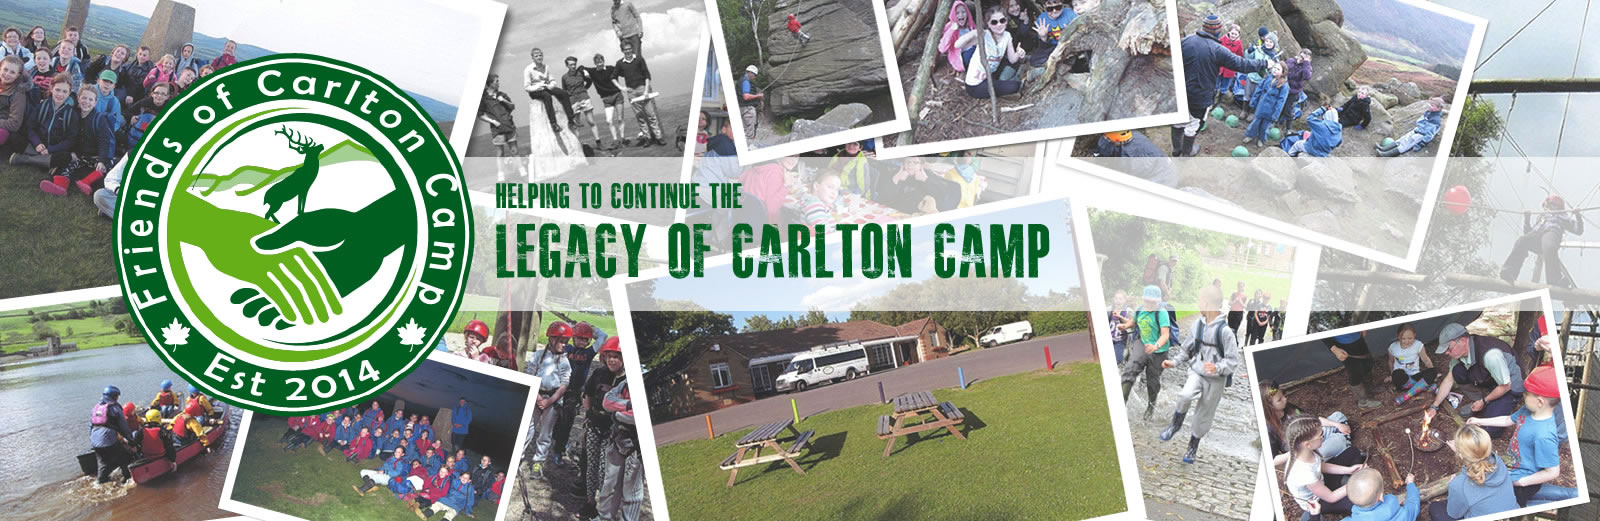 Carlton Camp